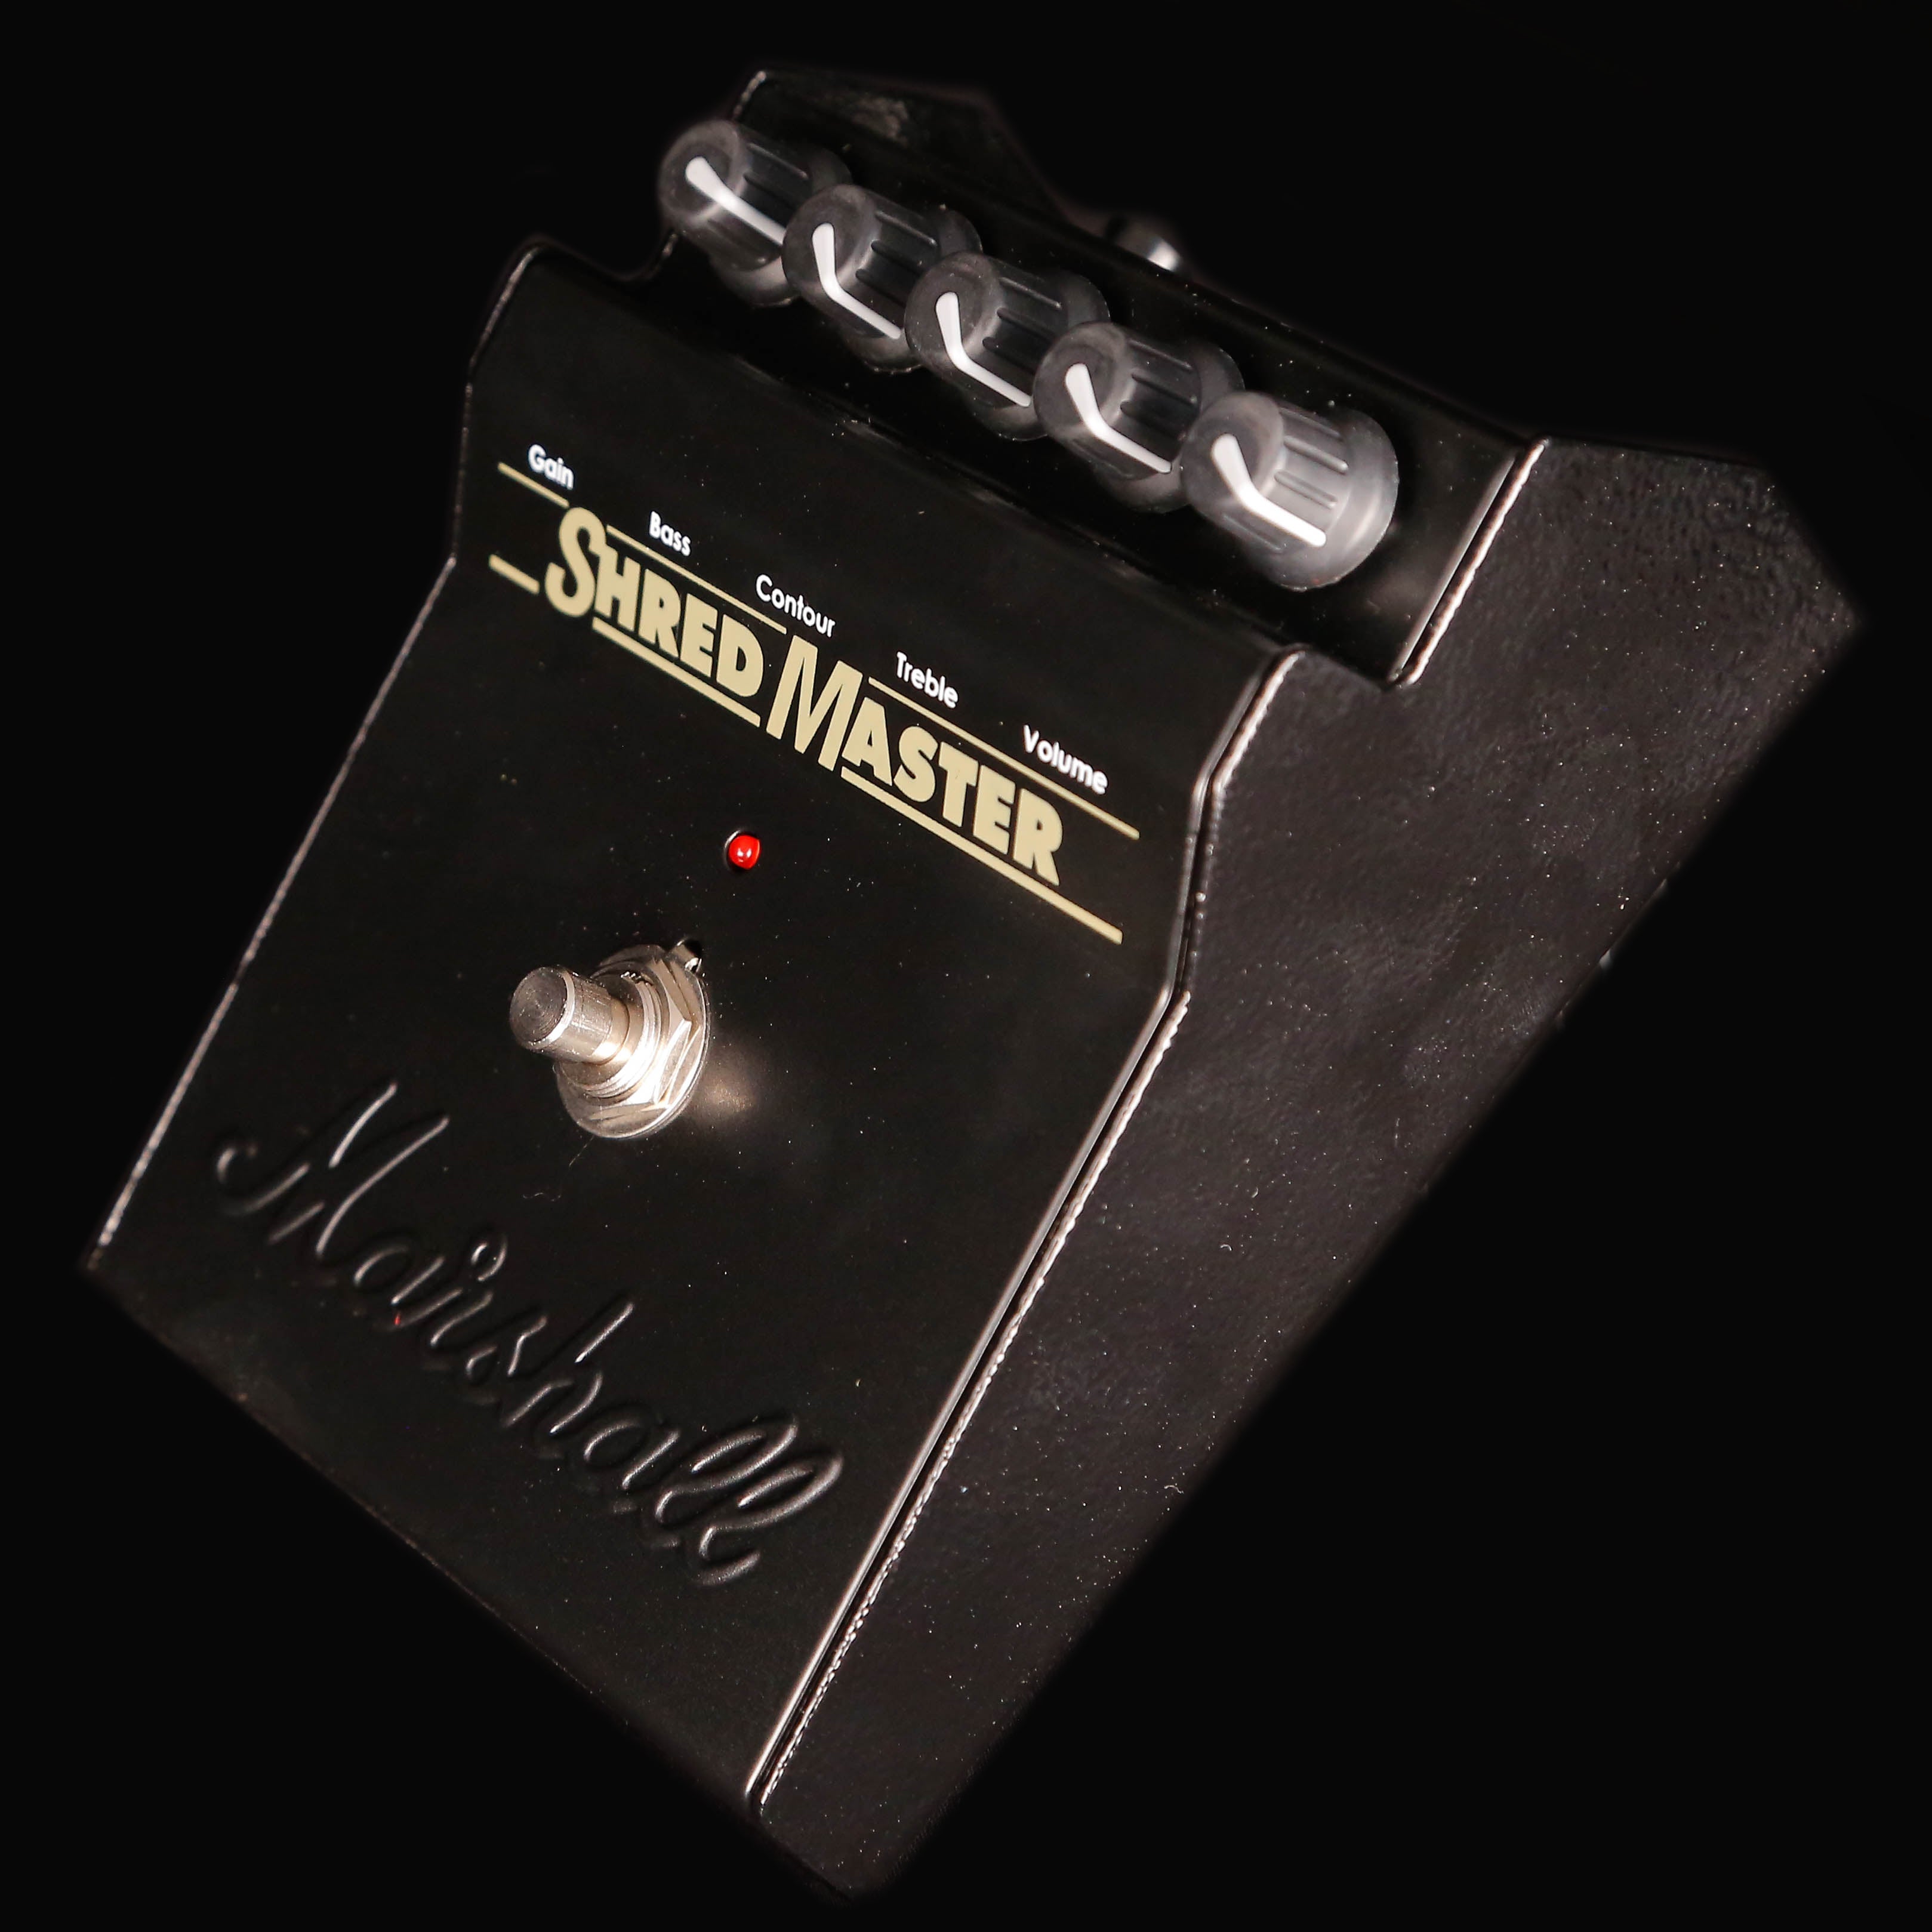 Marshall ShredMaster Overdrive/Distortion Pedal, Vintage Reissue